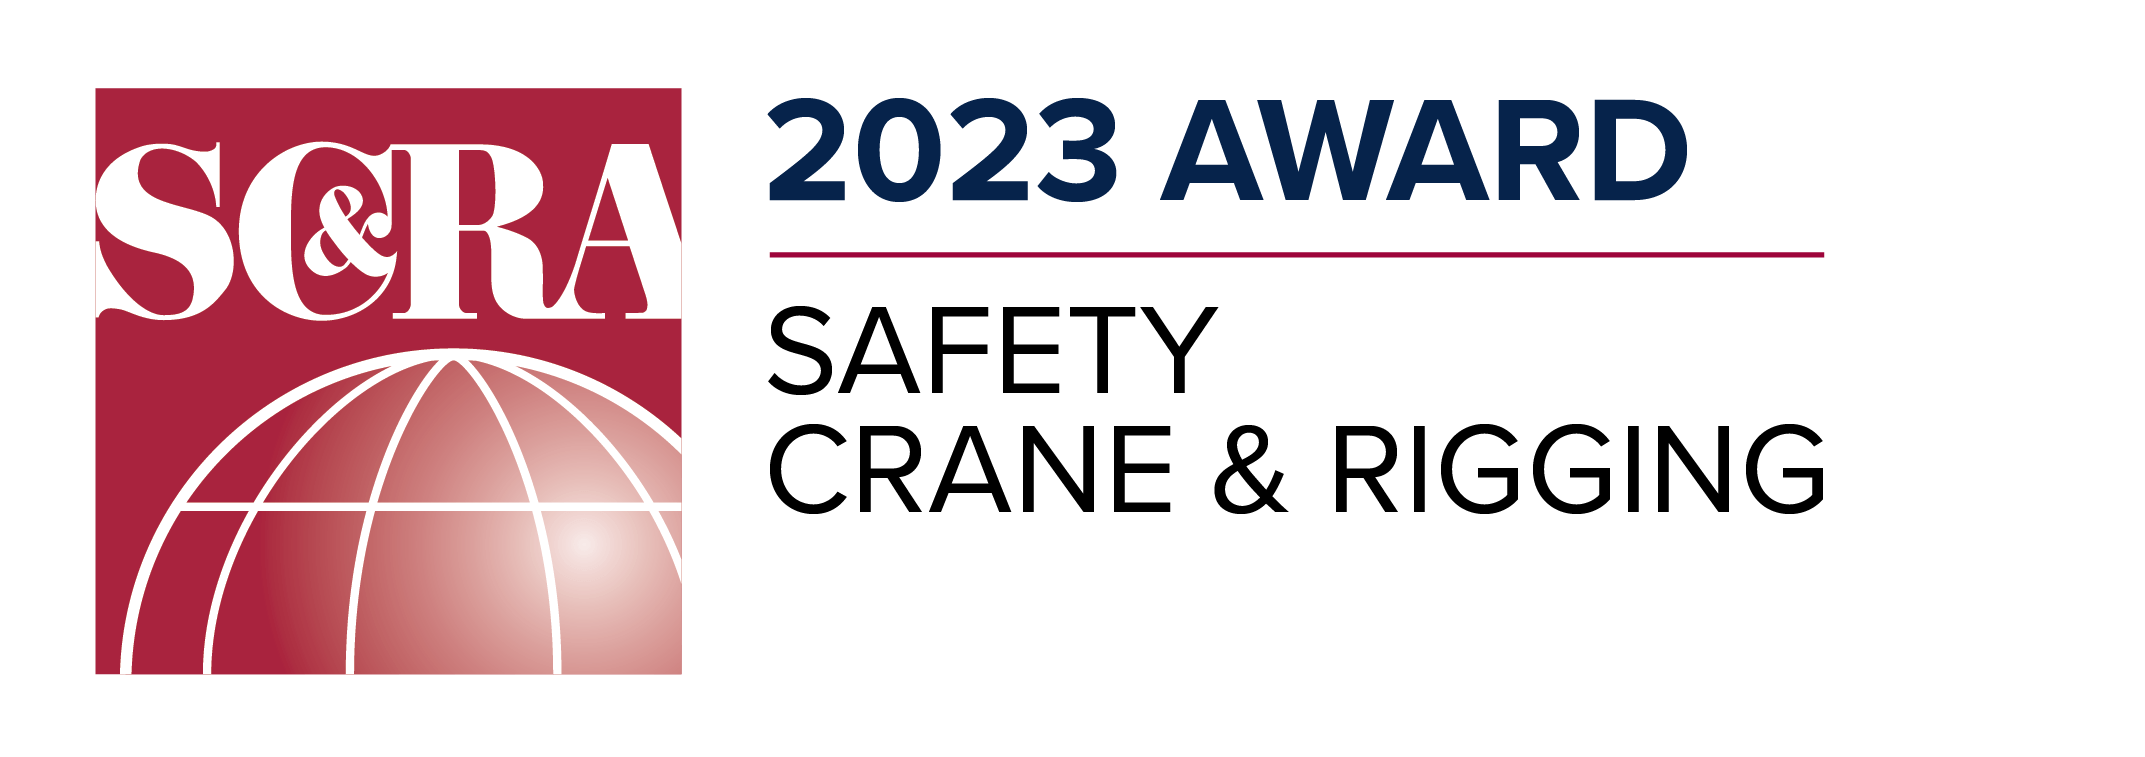 2023 Crane & Rigging Group Safety Award